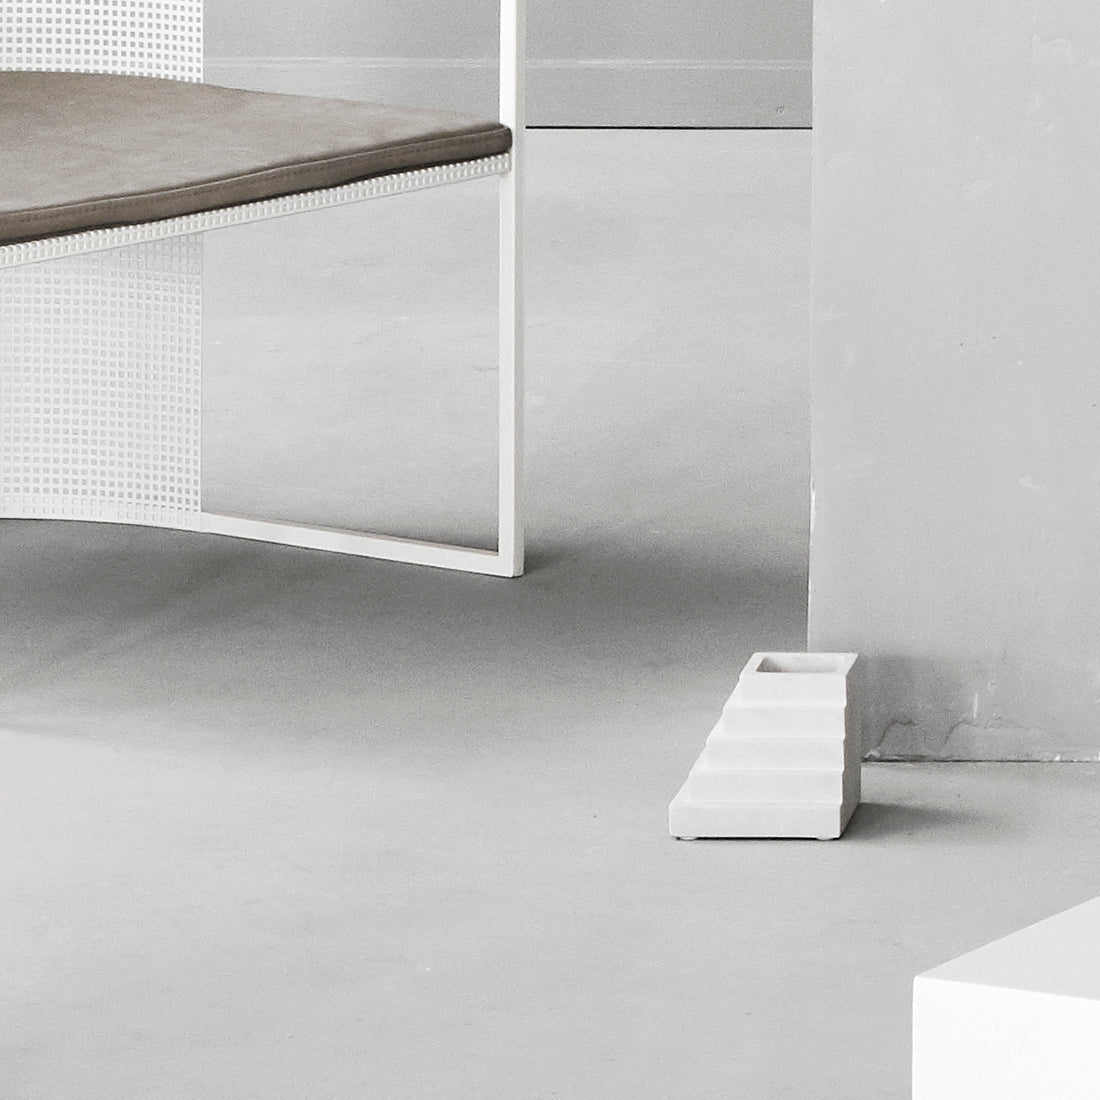 Sandstone Desk Organizer - Small, Light Grey